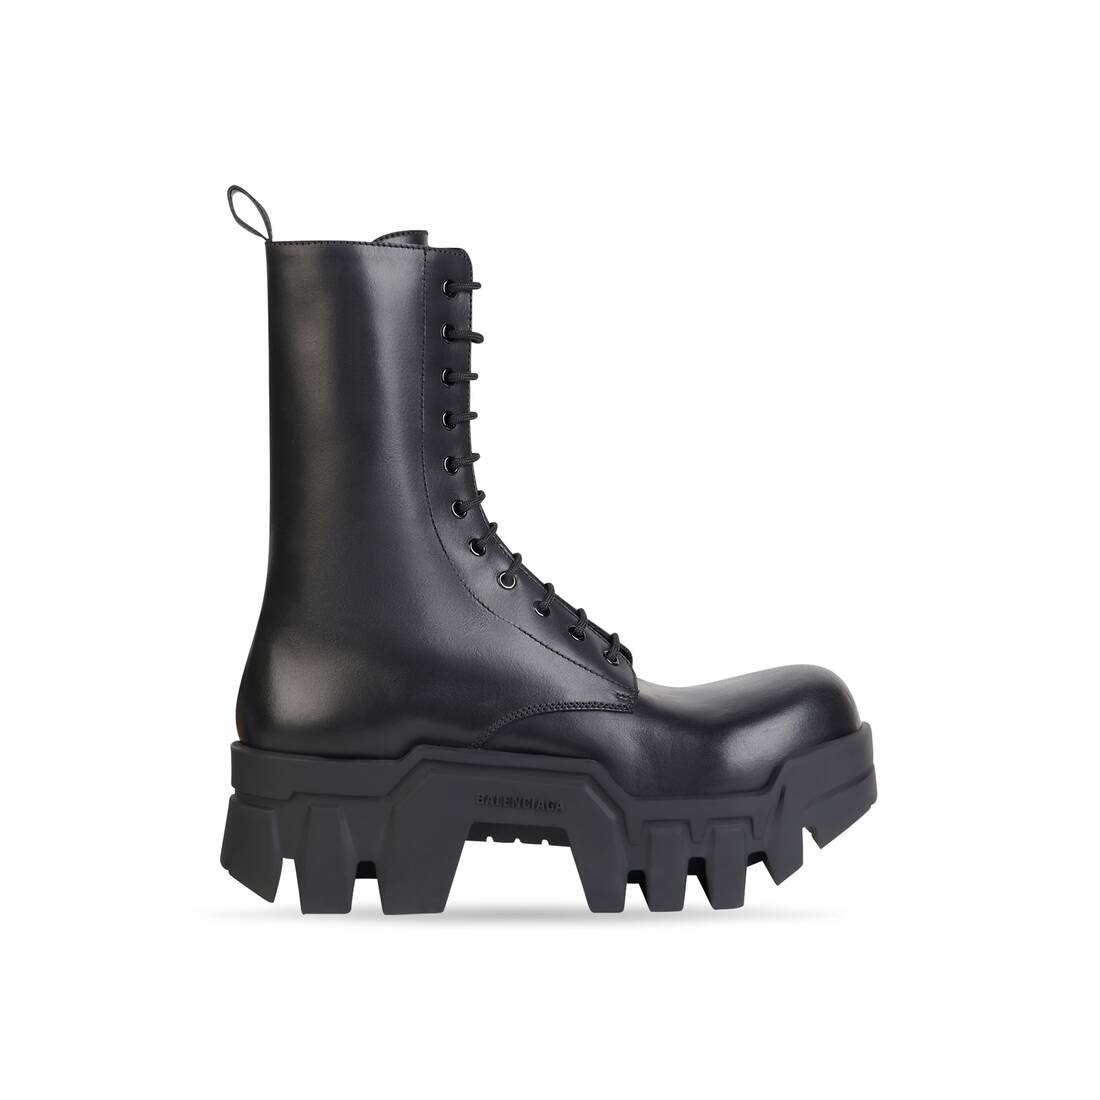 Strike leather boots Balenciaga Black size 44 EU in Leather  30206193